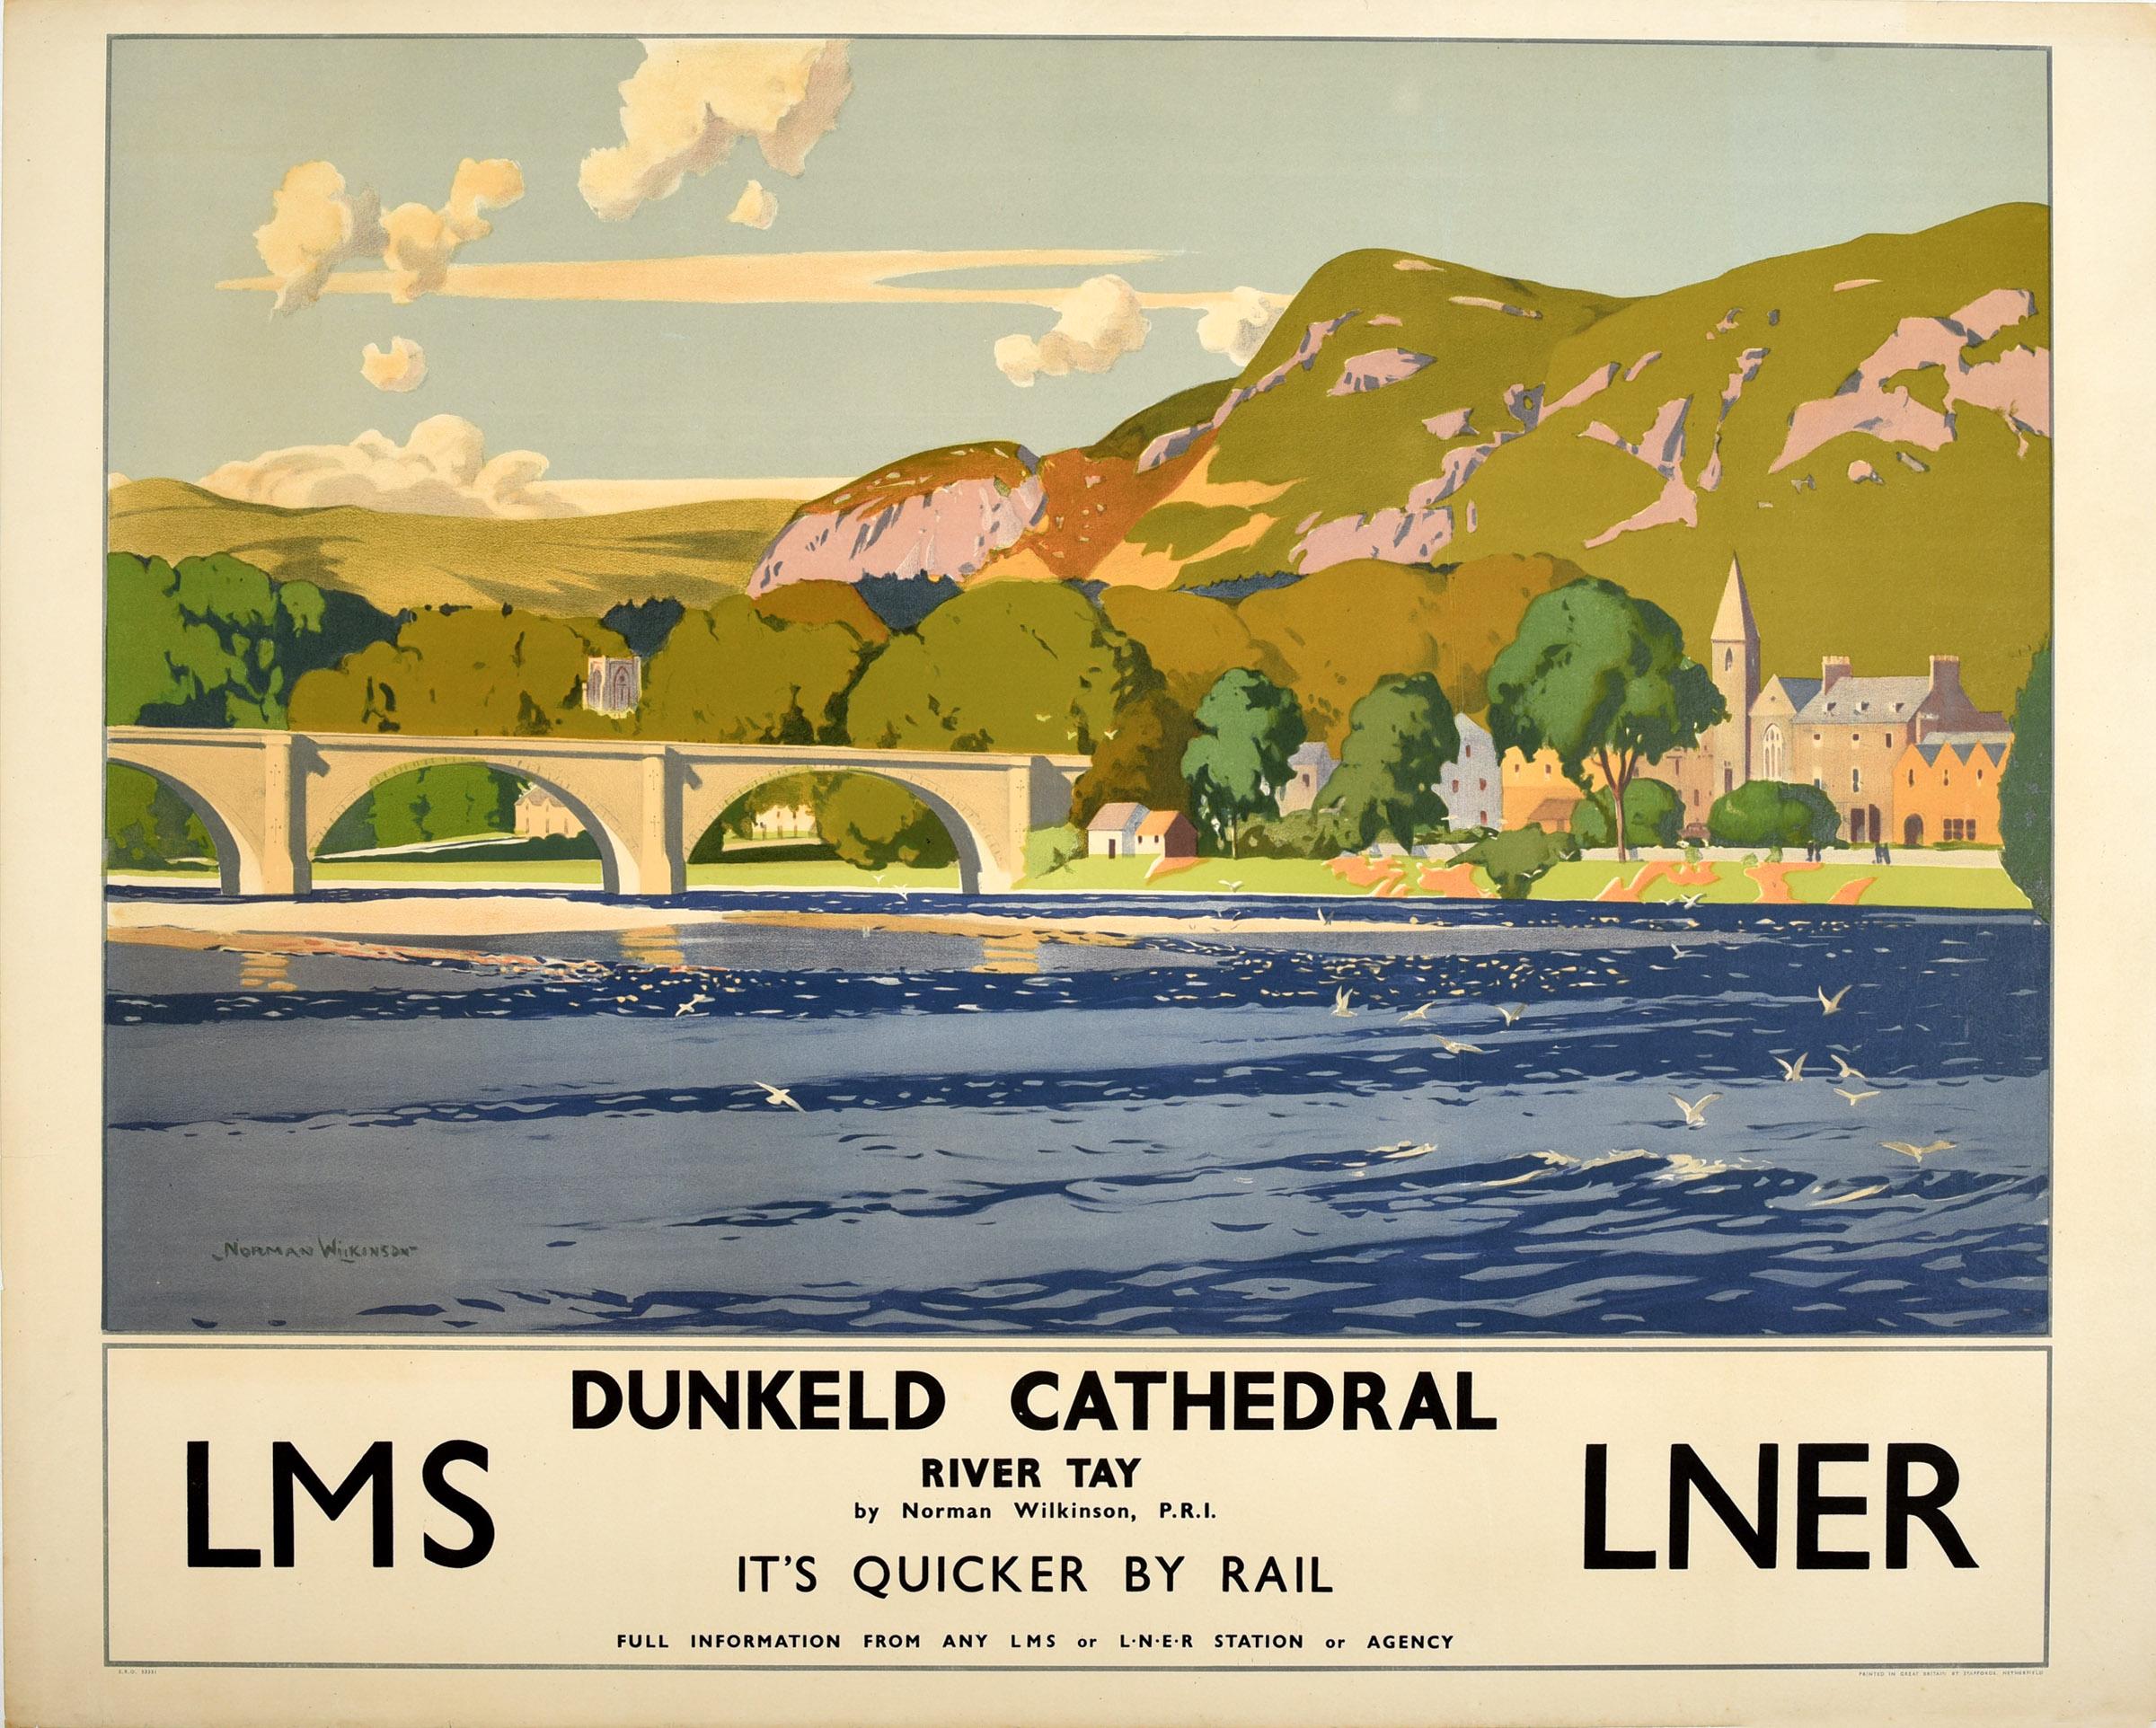 Norman Wilkinson CBE PRI Print - Original Vintage Poster Dunkeld Cathedral River Tay LMS LNER Railway Travel Art